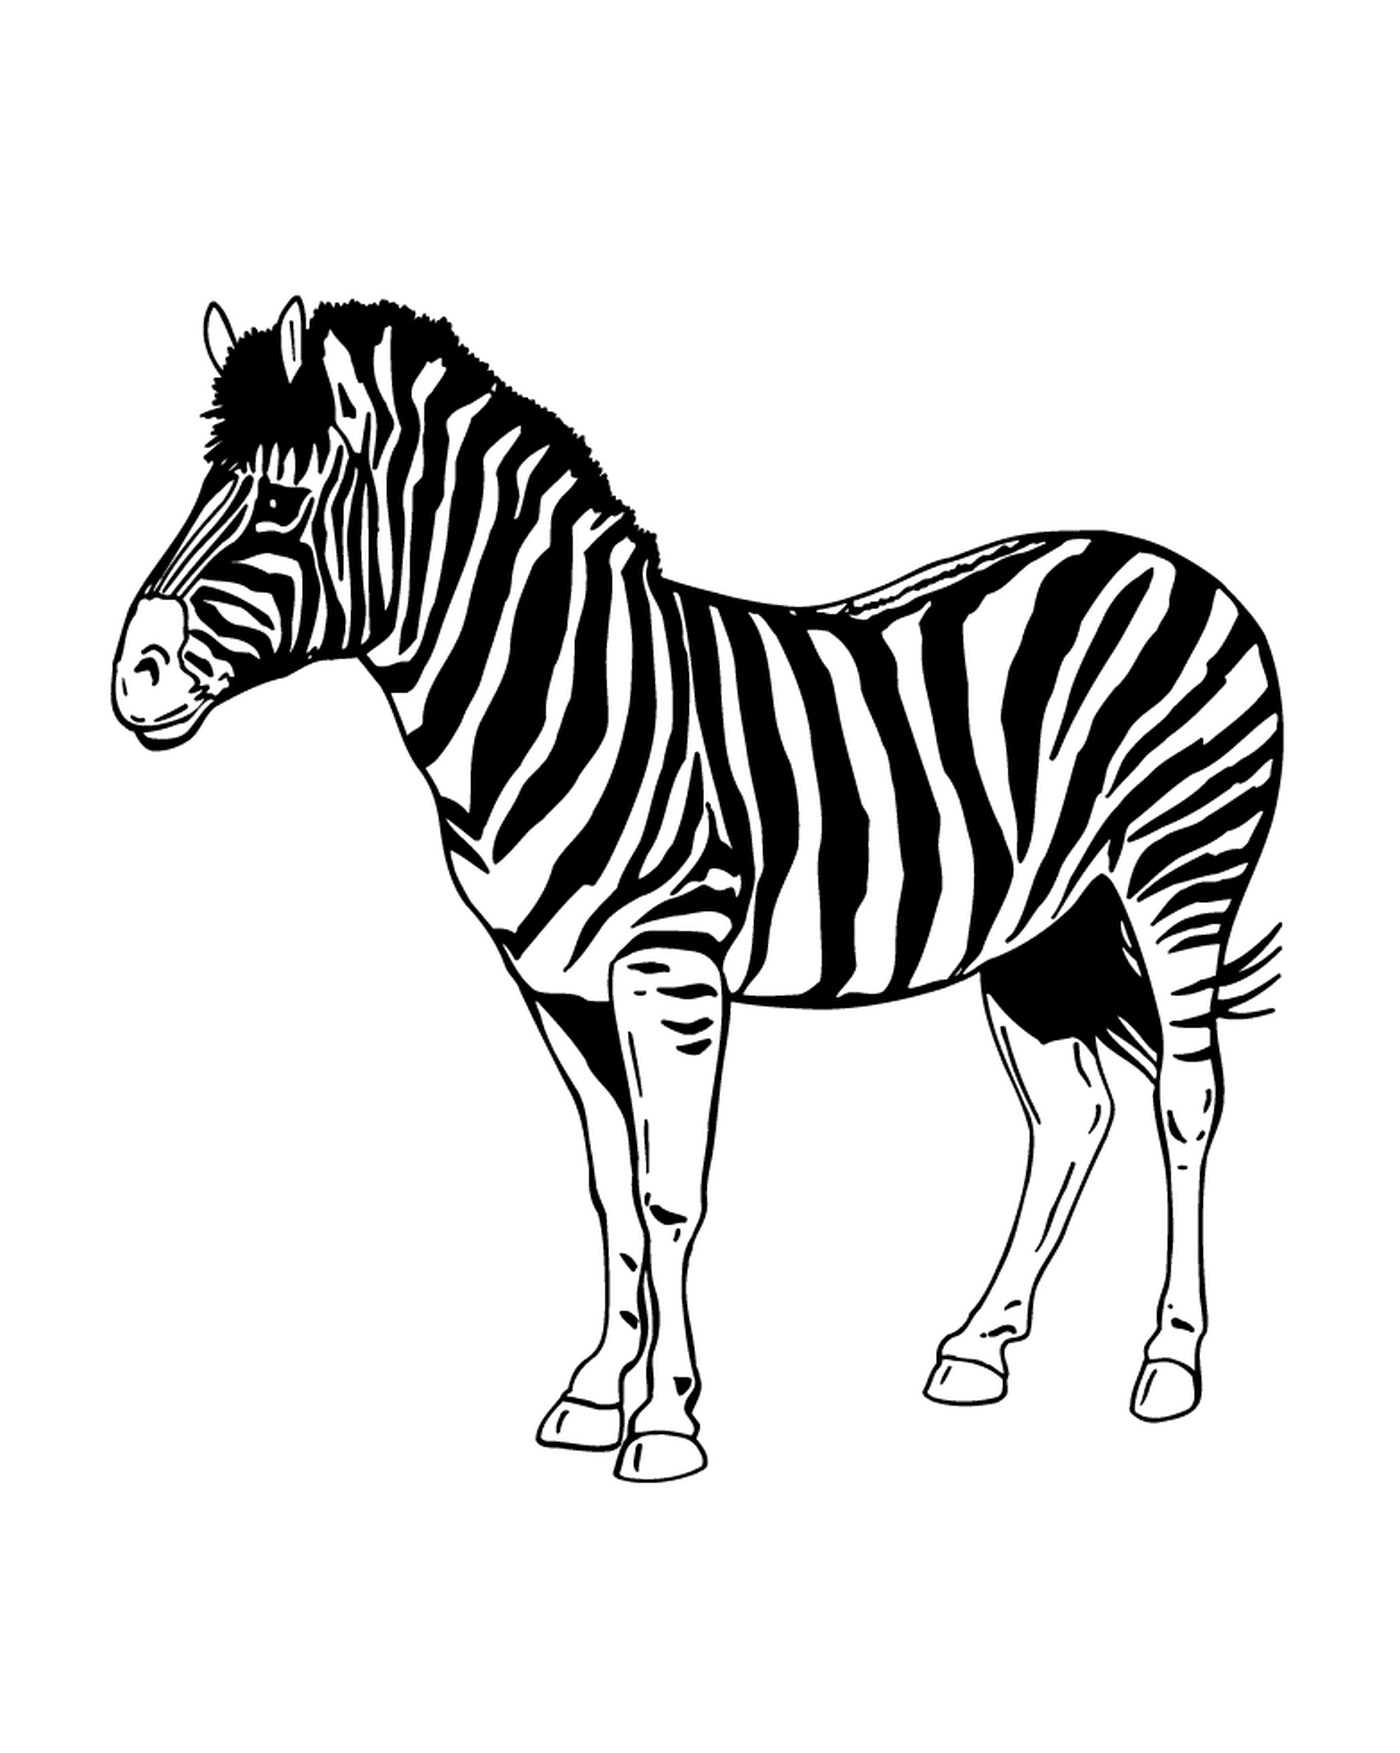  Cautivante y misteriosa Zebra 